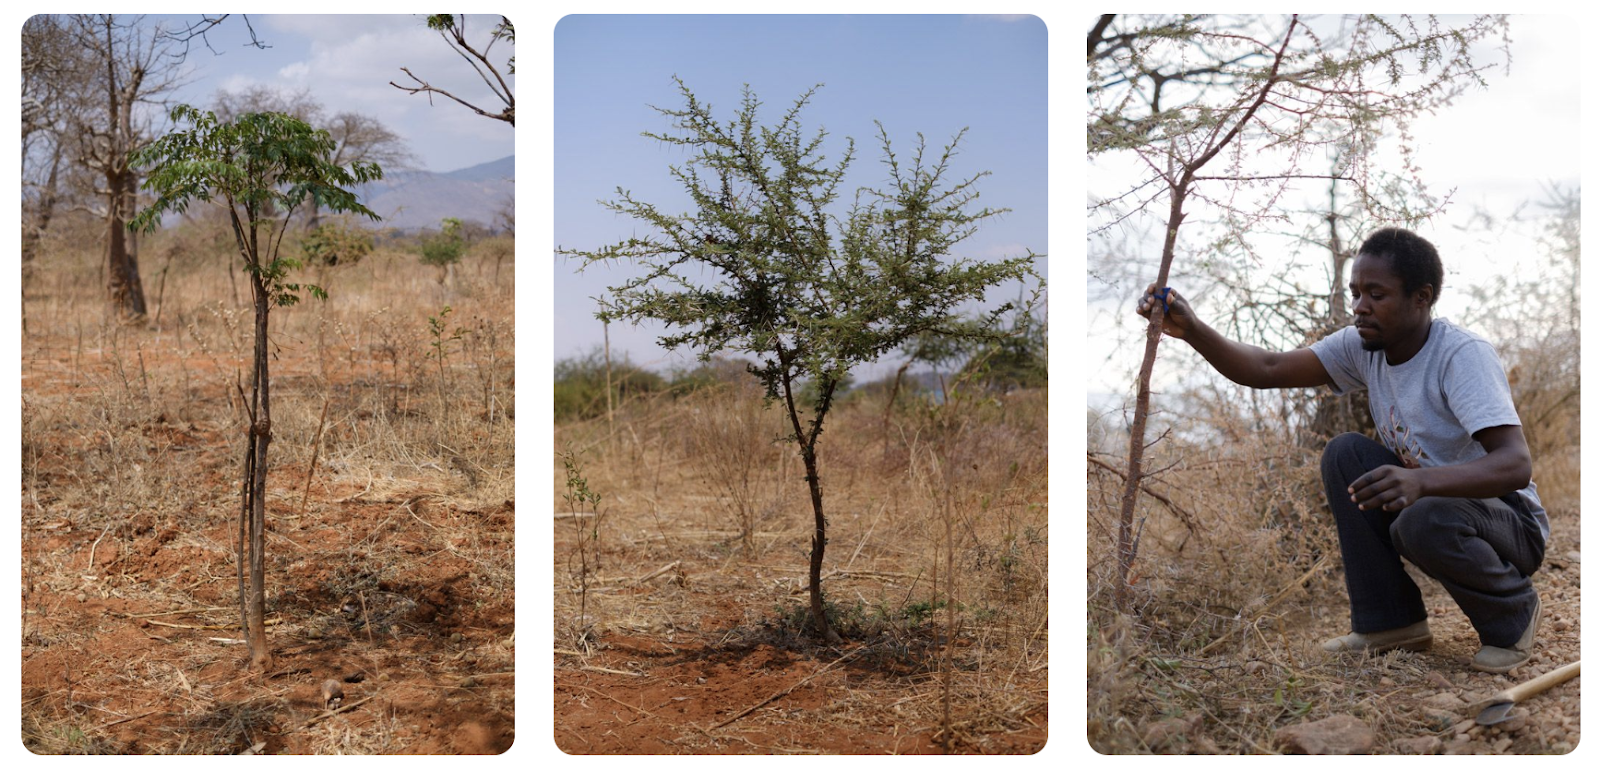 Shrubs grow into trees in Tanzania